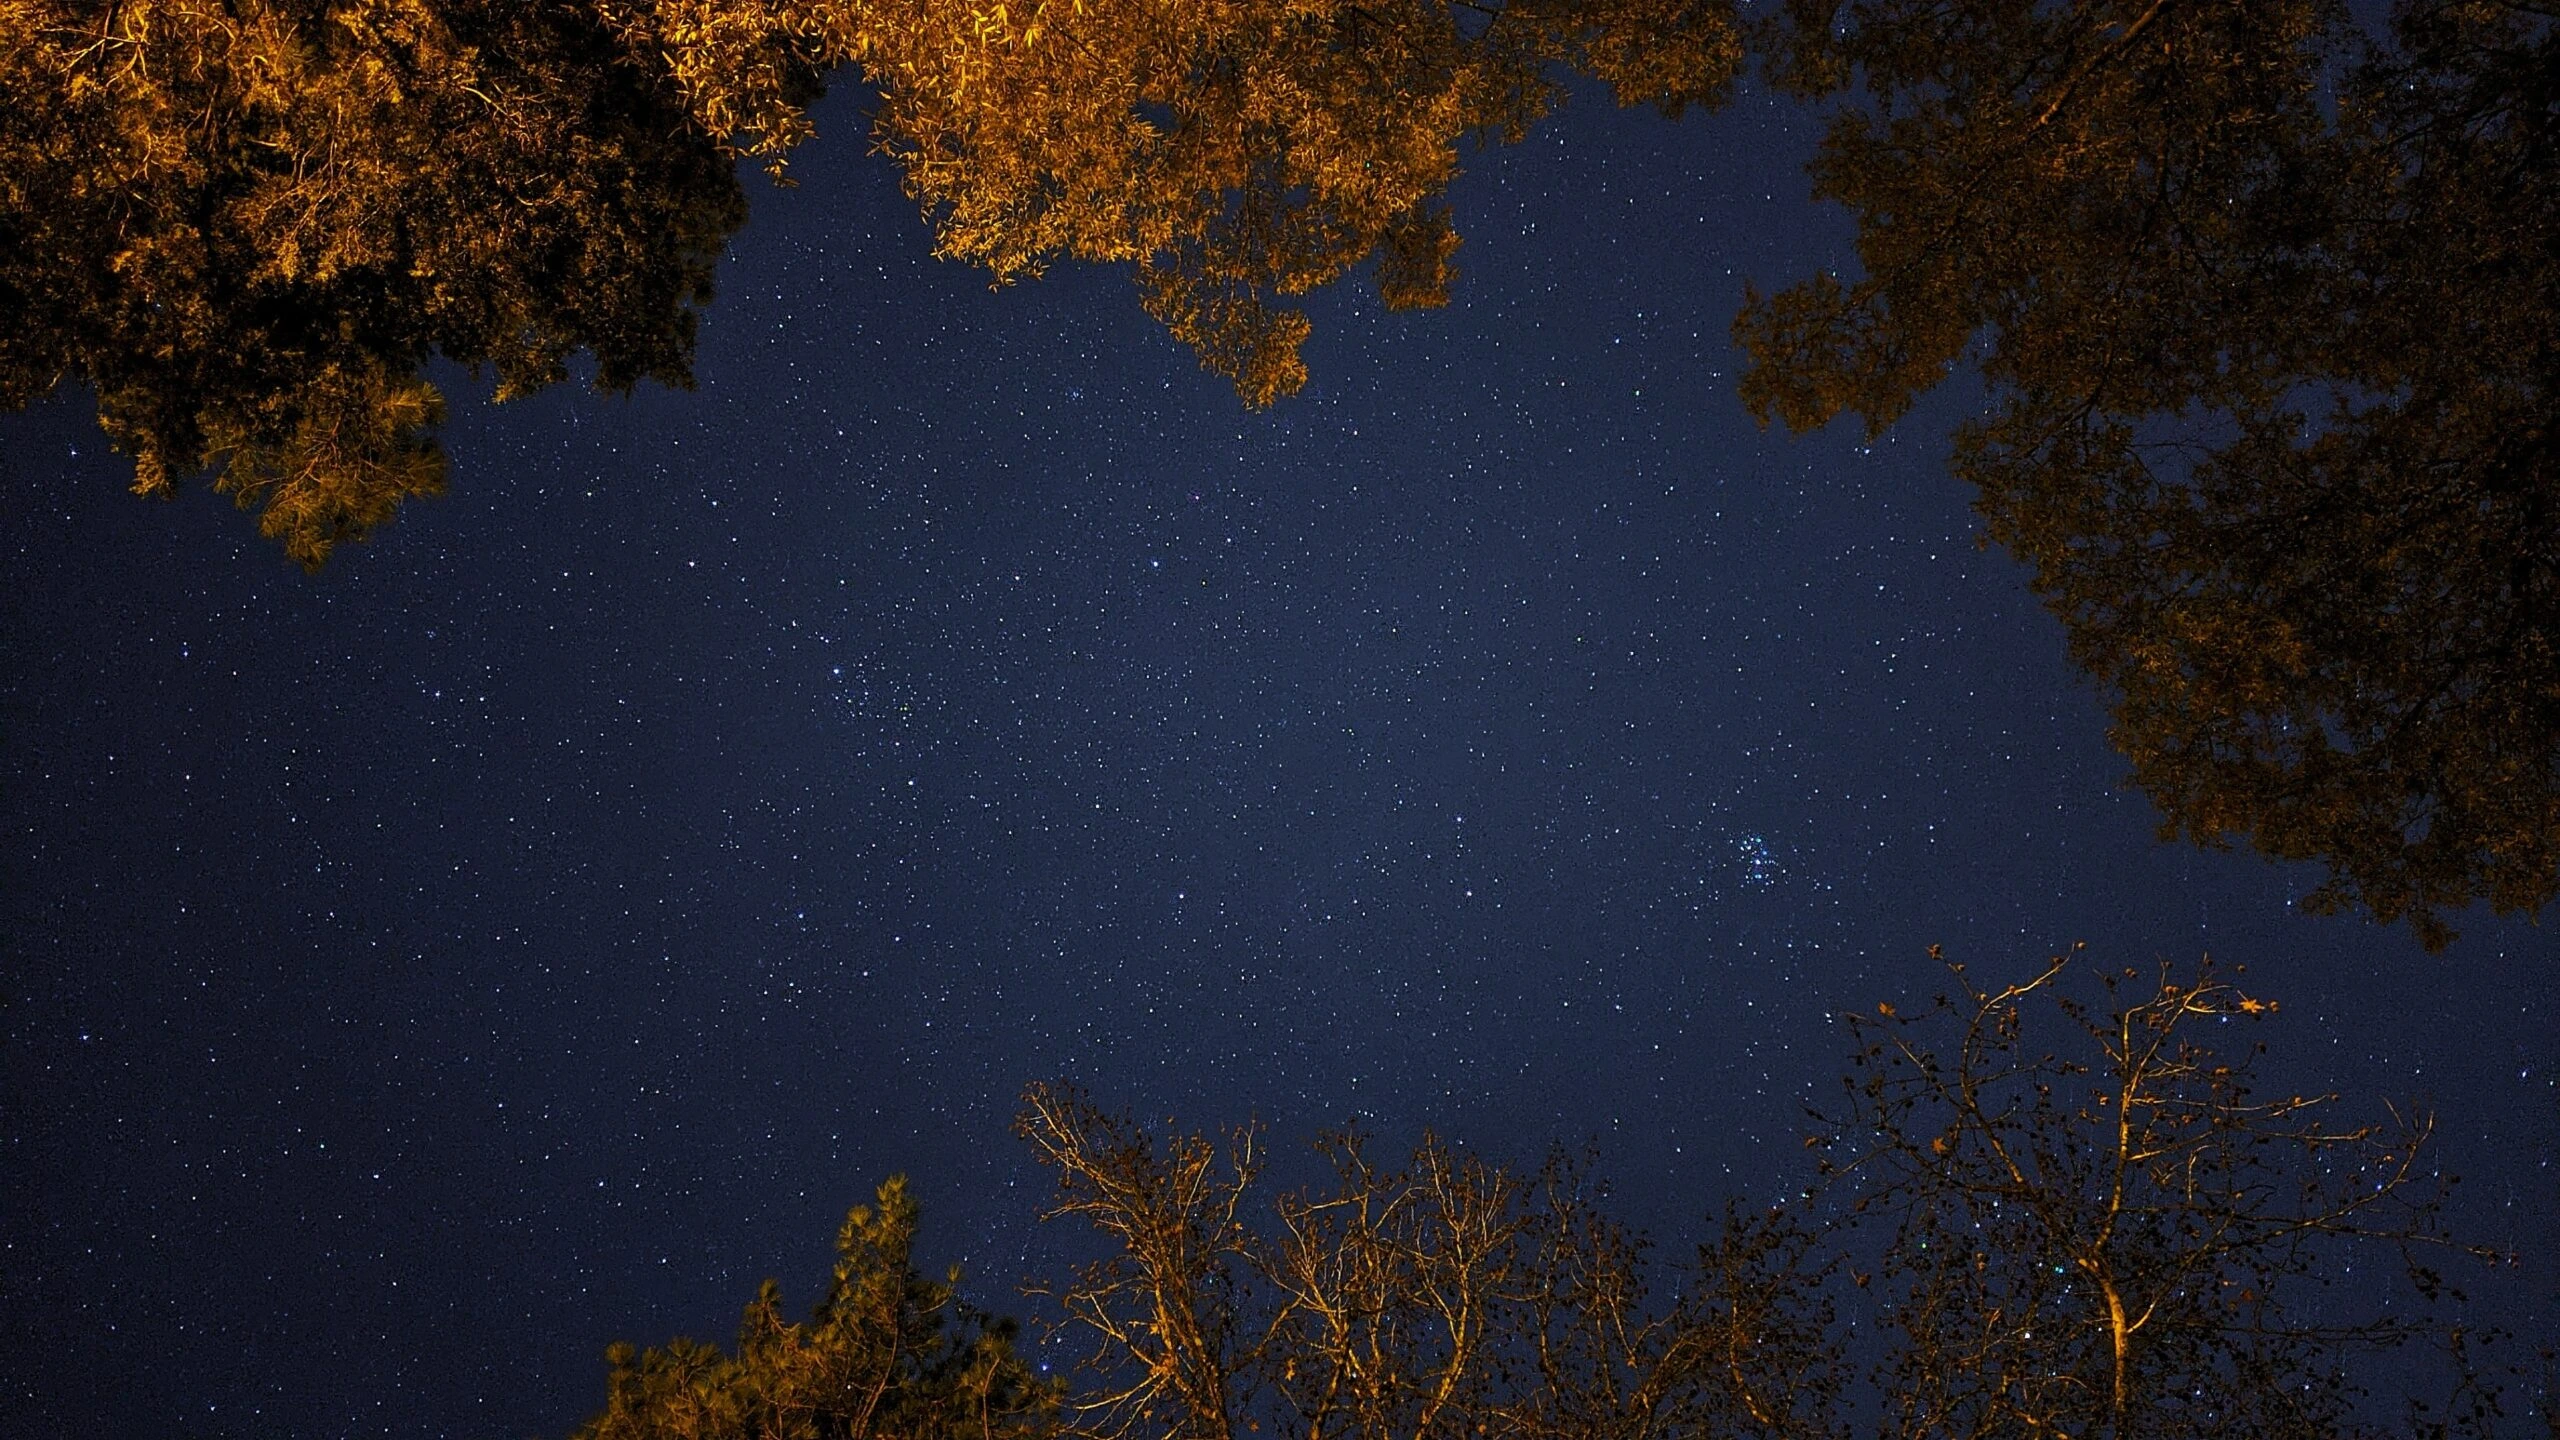 chuck-givens-starlit sky through the trees-unsplash